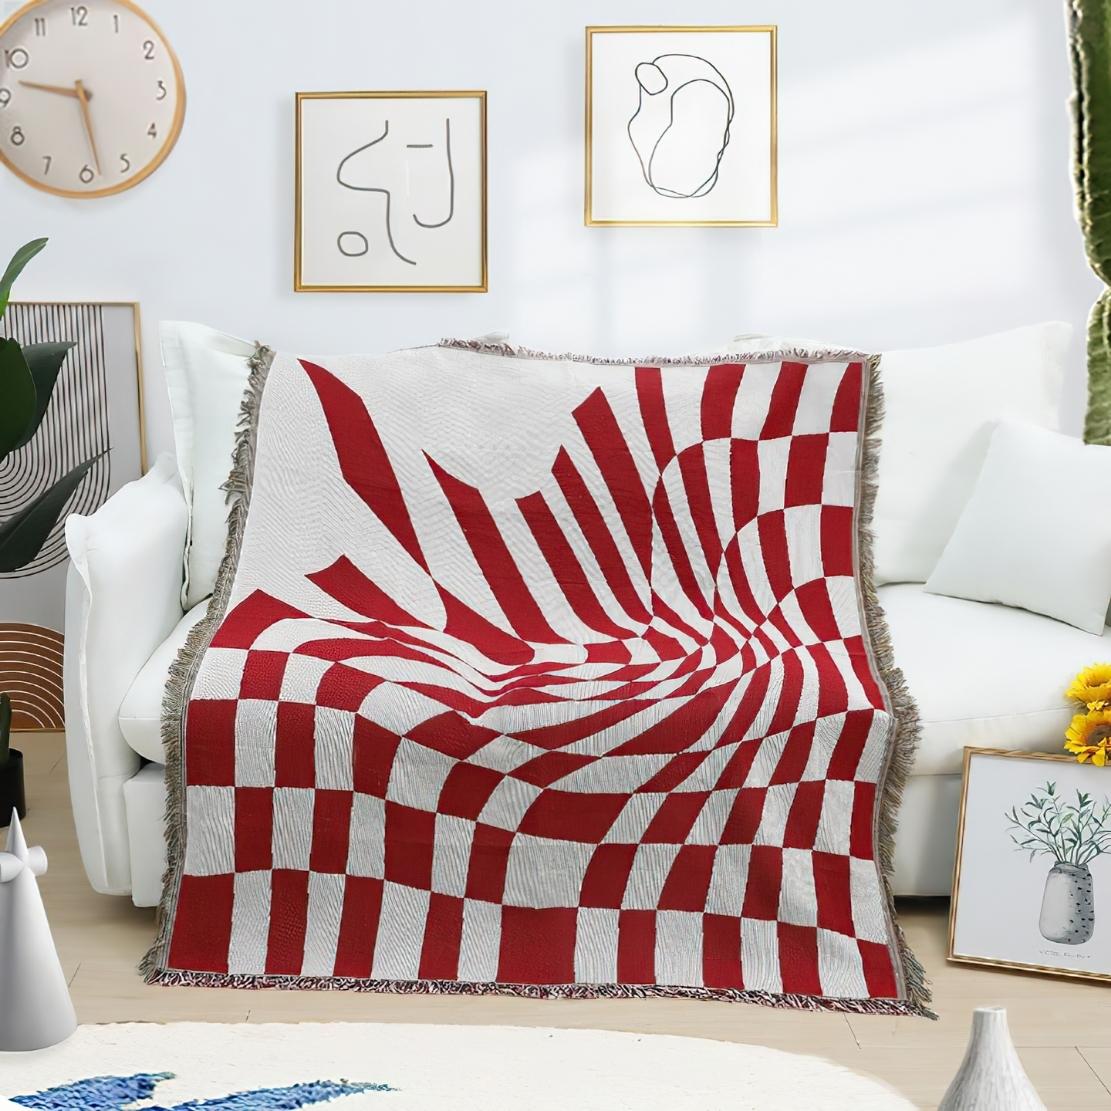 Red & white groovy retro checkerboard tassel blanket